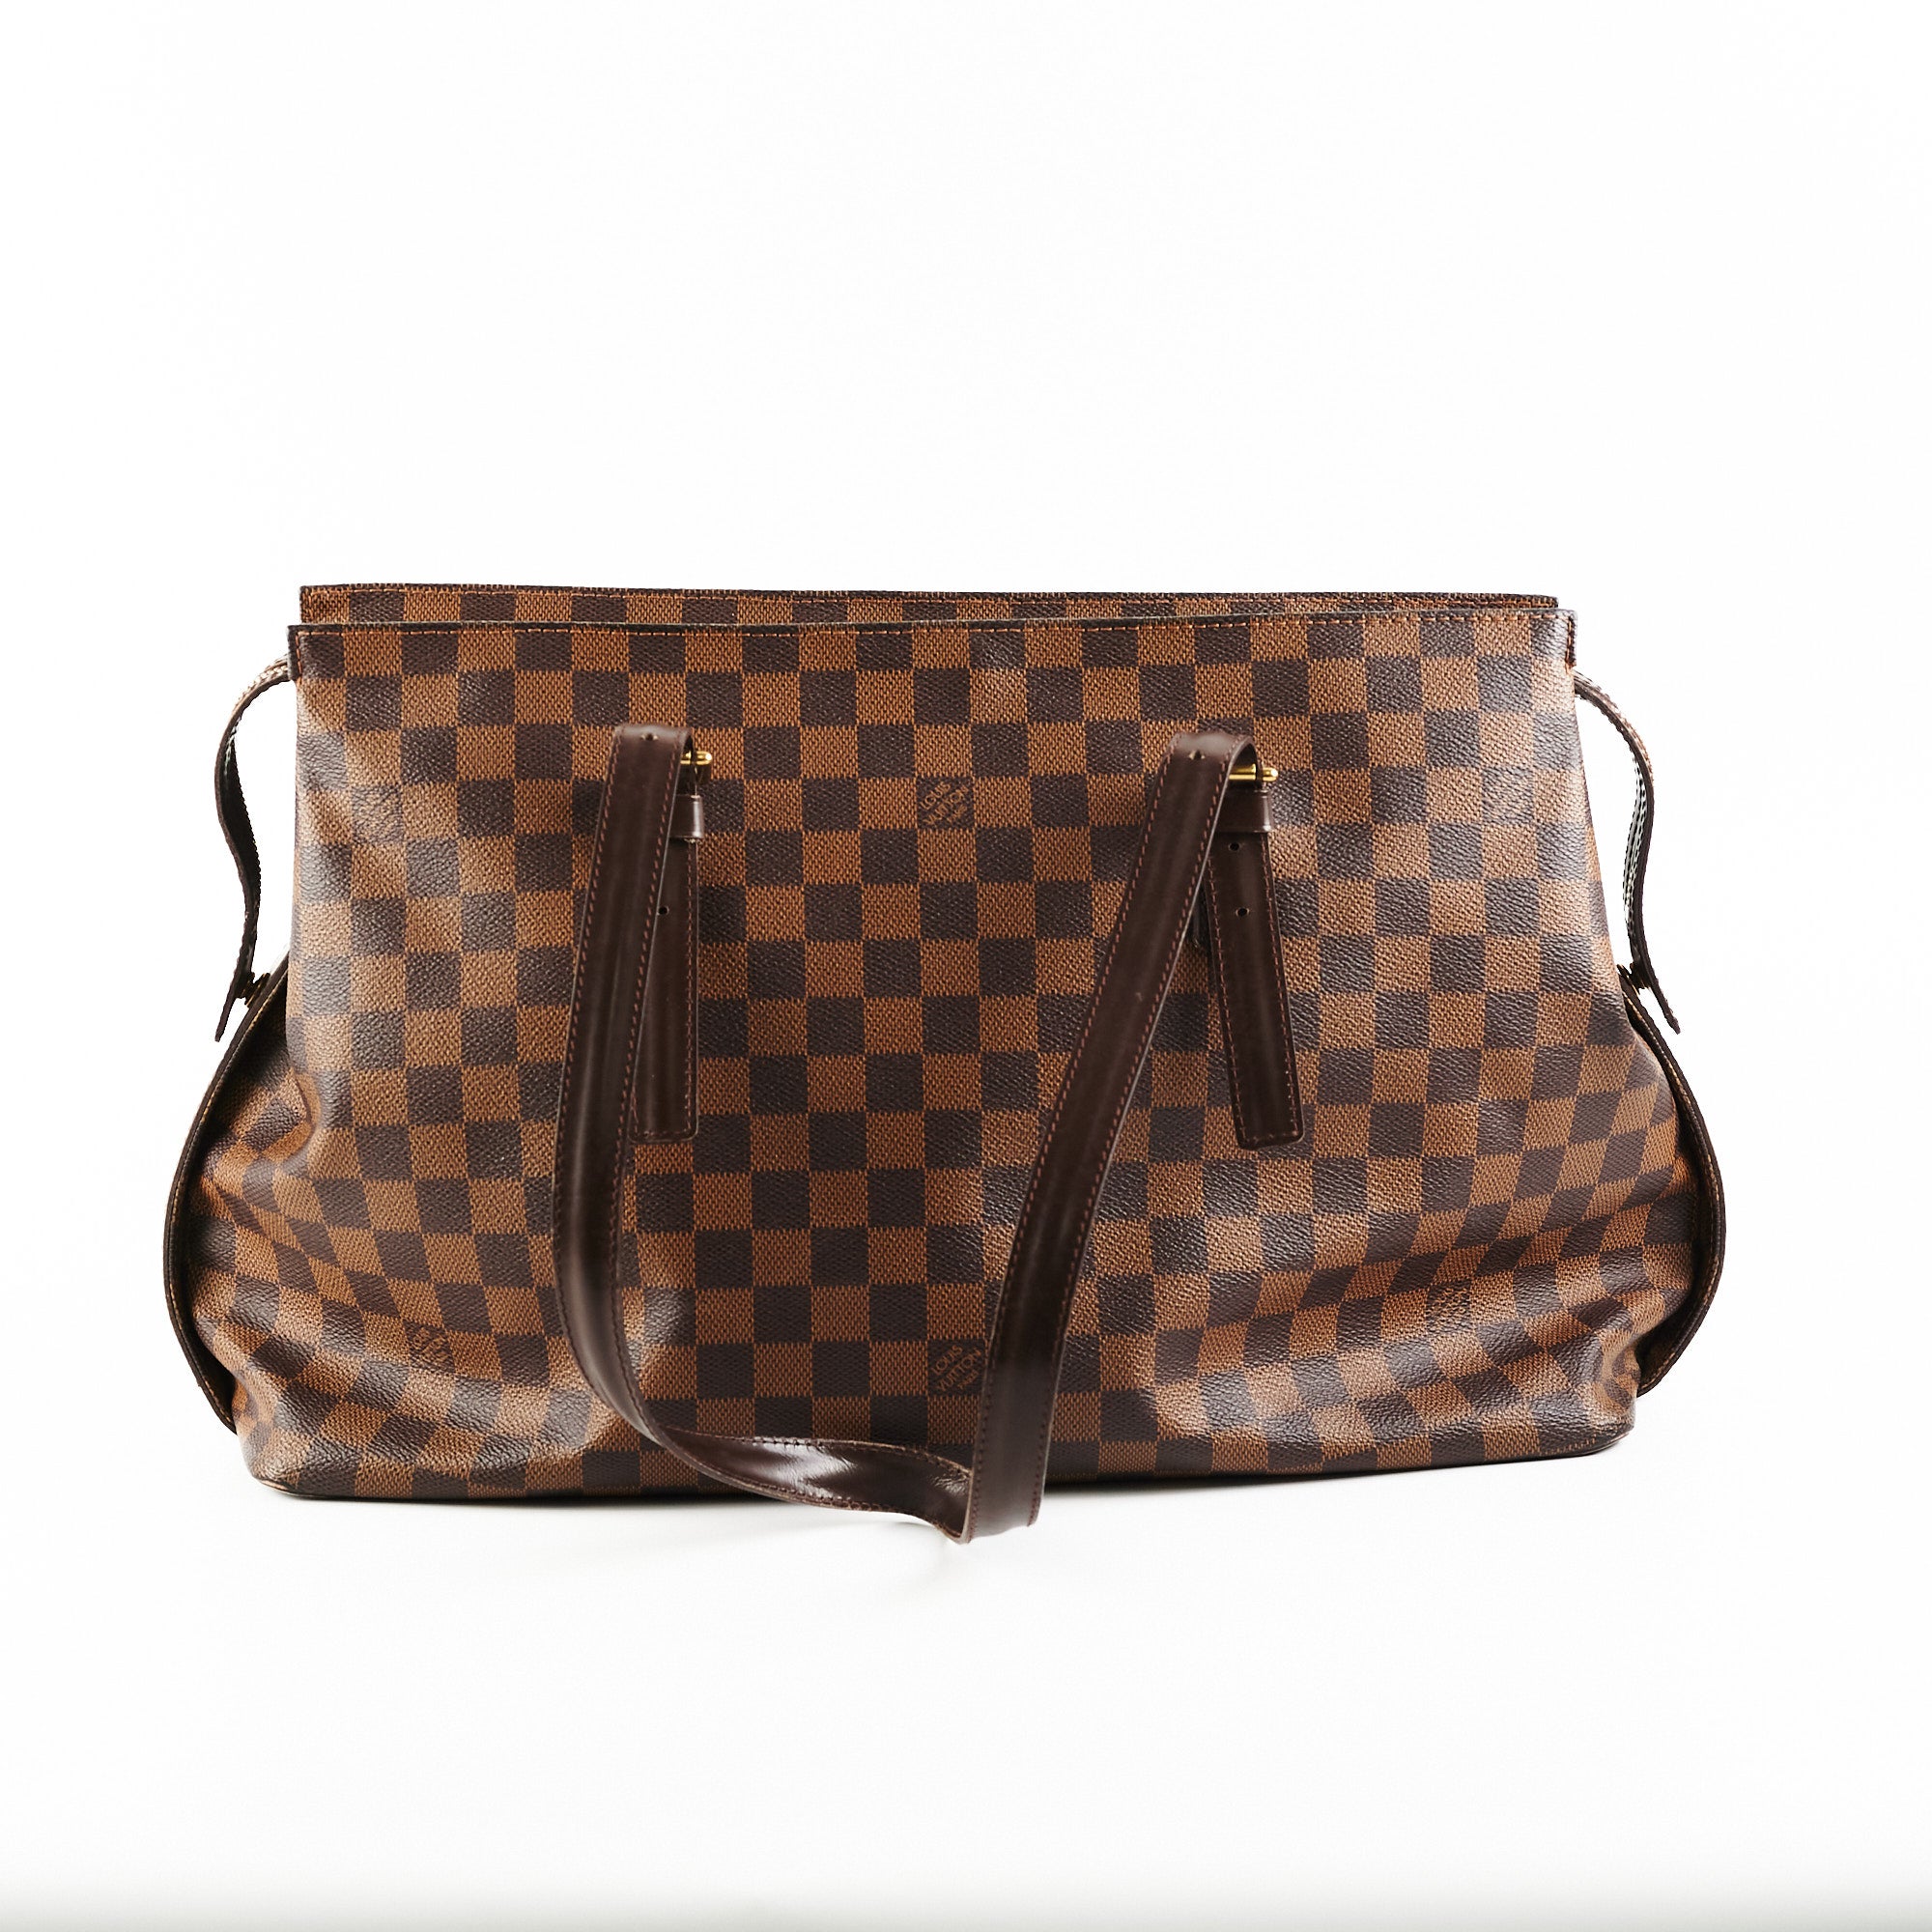 Louis Vuitton - Louis Vuitton Chelsea Damier Ebene Bag on Designer Wardrobe